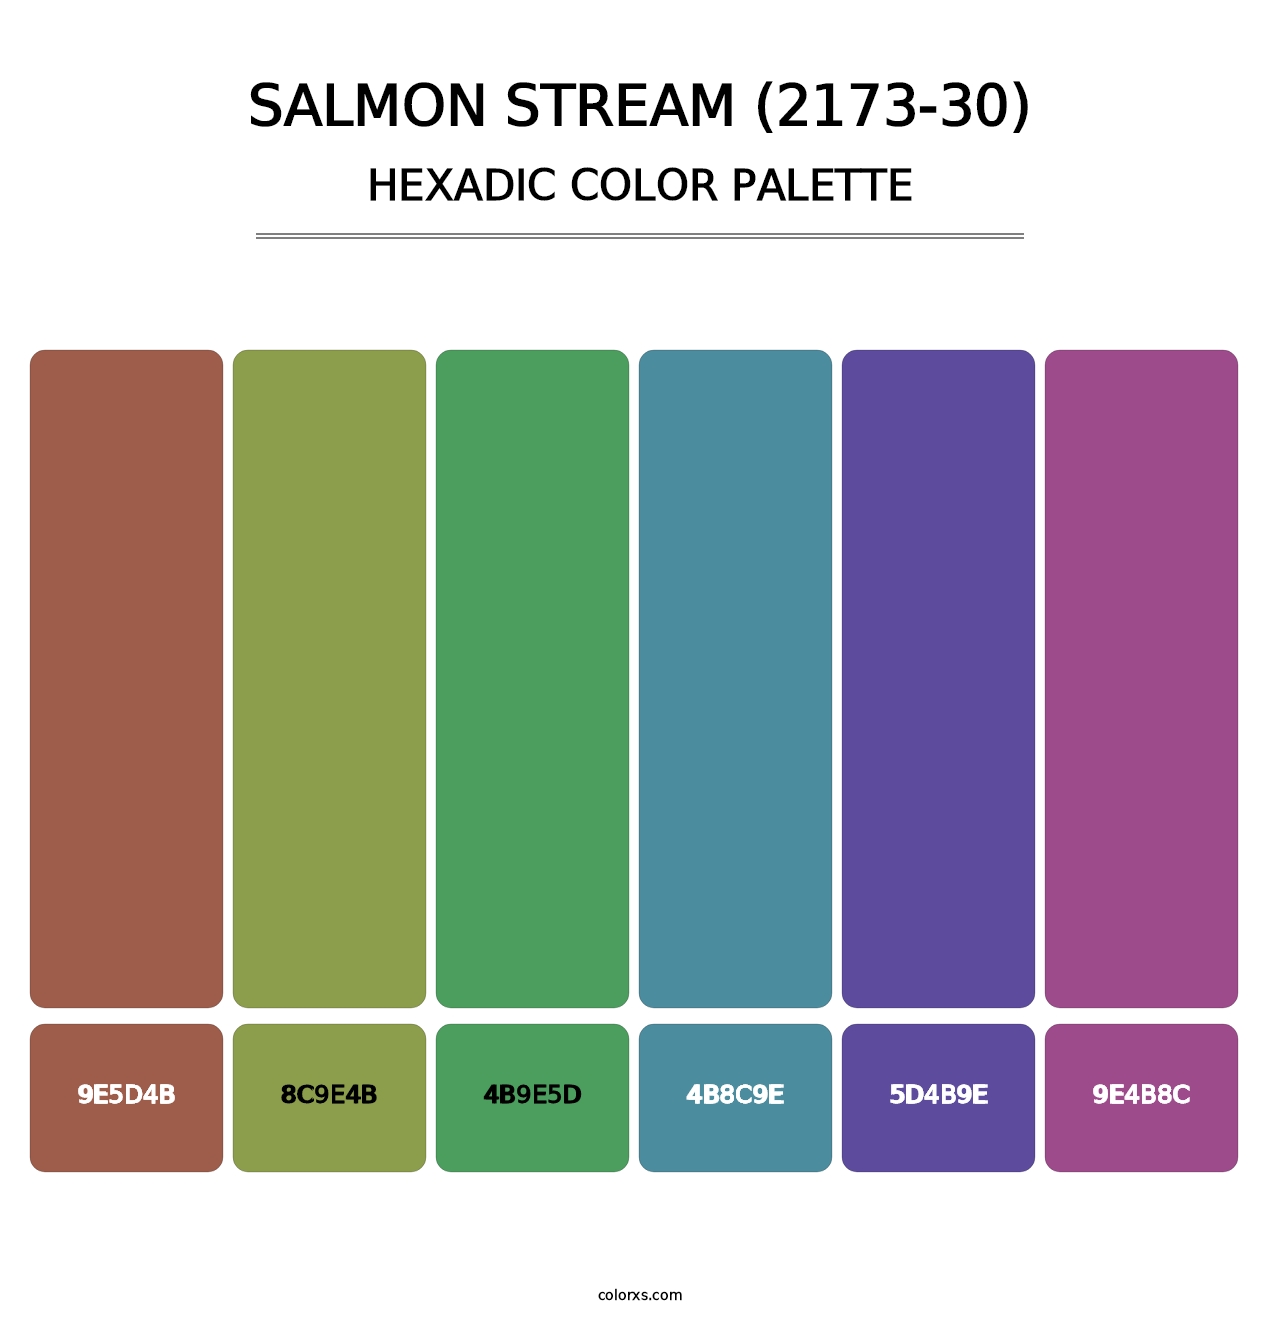 Salmon Stream (2173-30) - Hexadic Color Palette